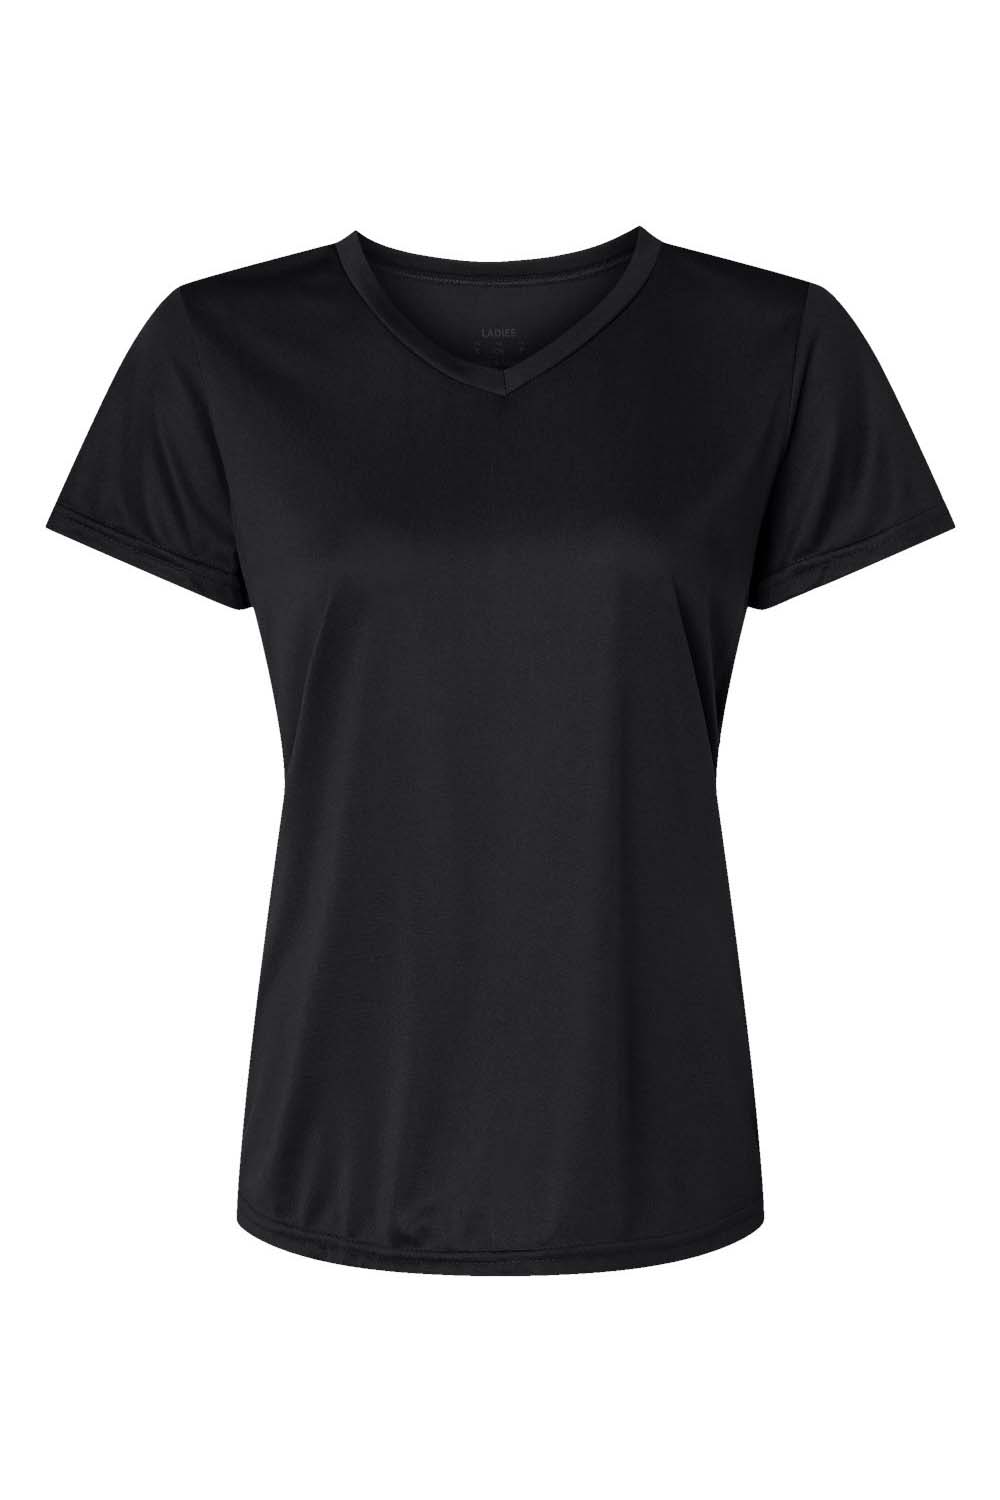 Augusta Sportswear 1790 Womens Moisture Wicking Short Sleeve V-Neck T-Shirt Black Model Flat Front